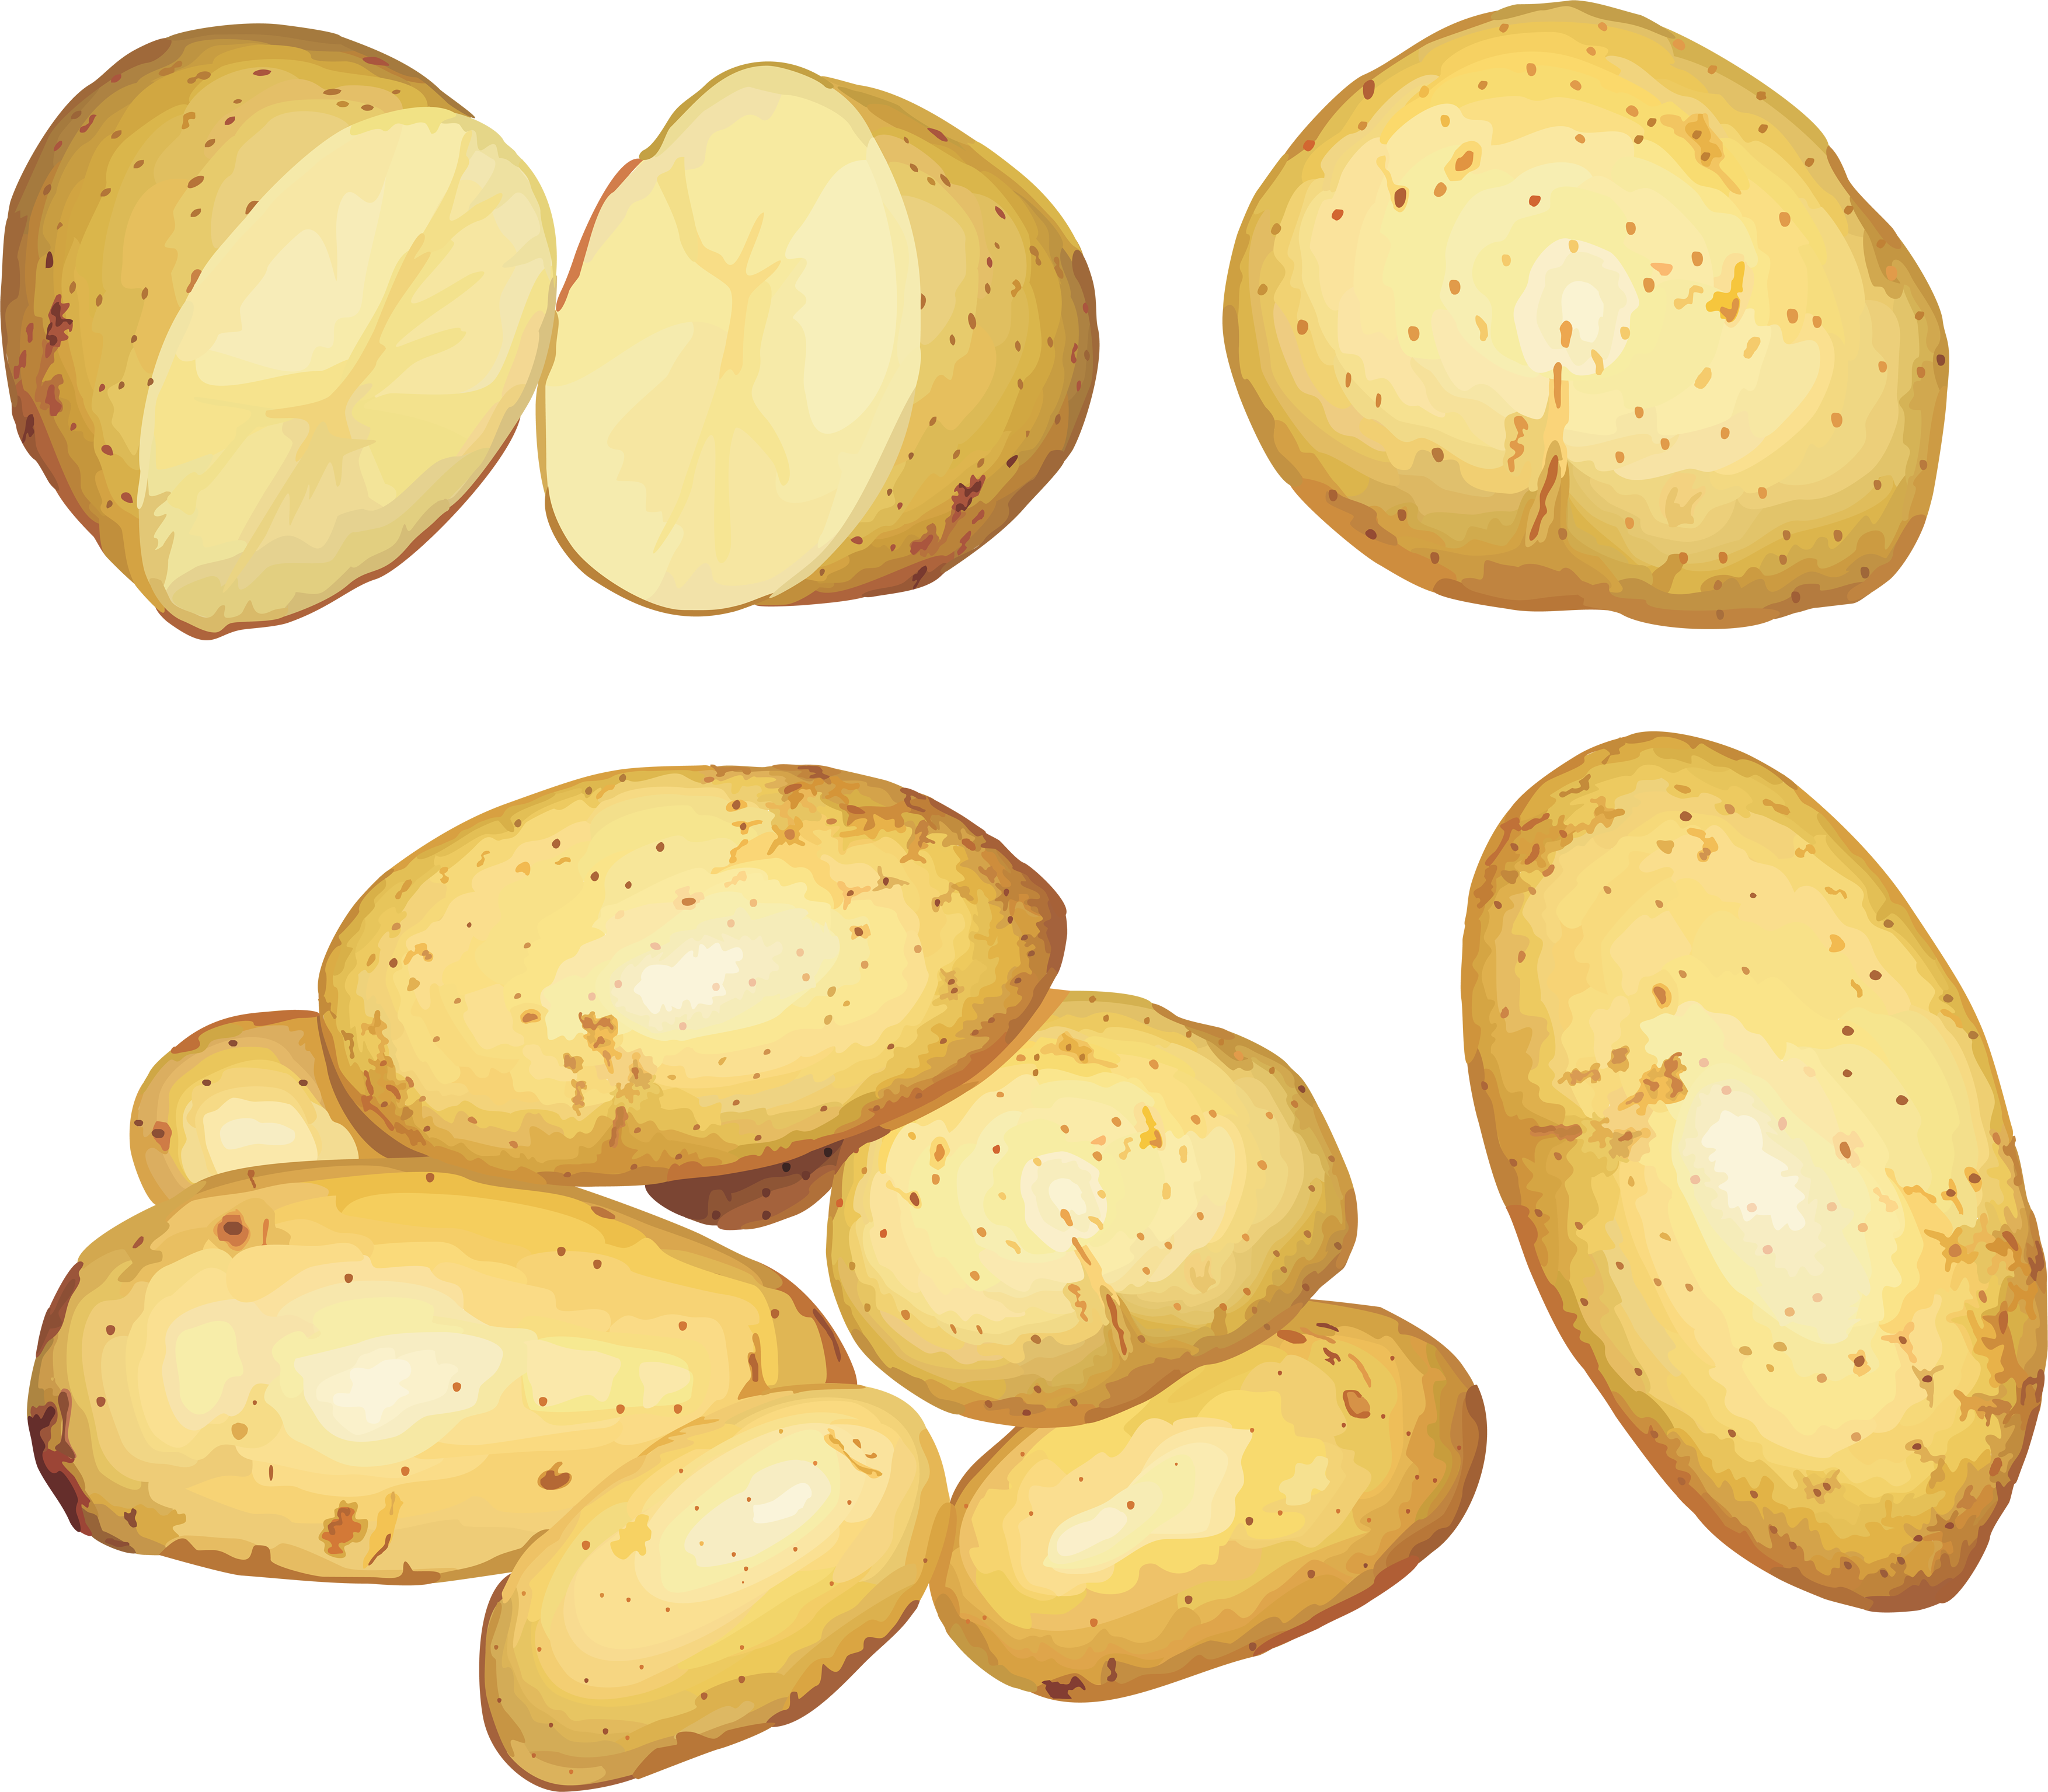 Kartoffeln, Kartoffeln